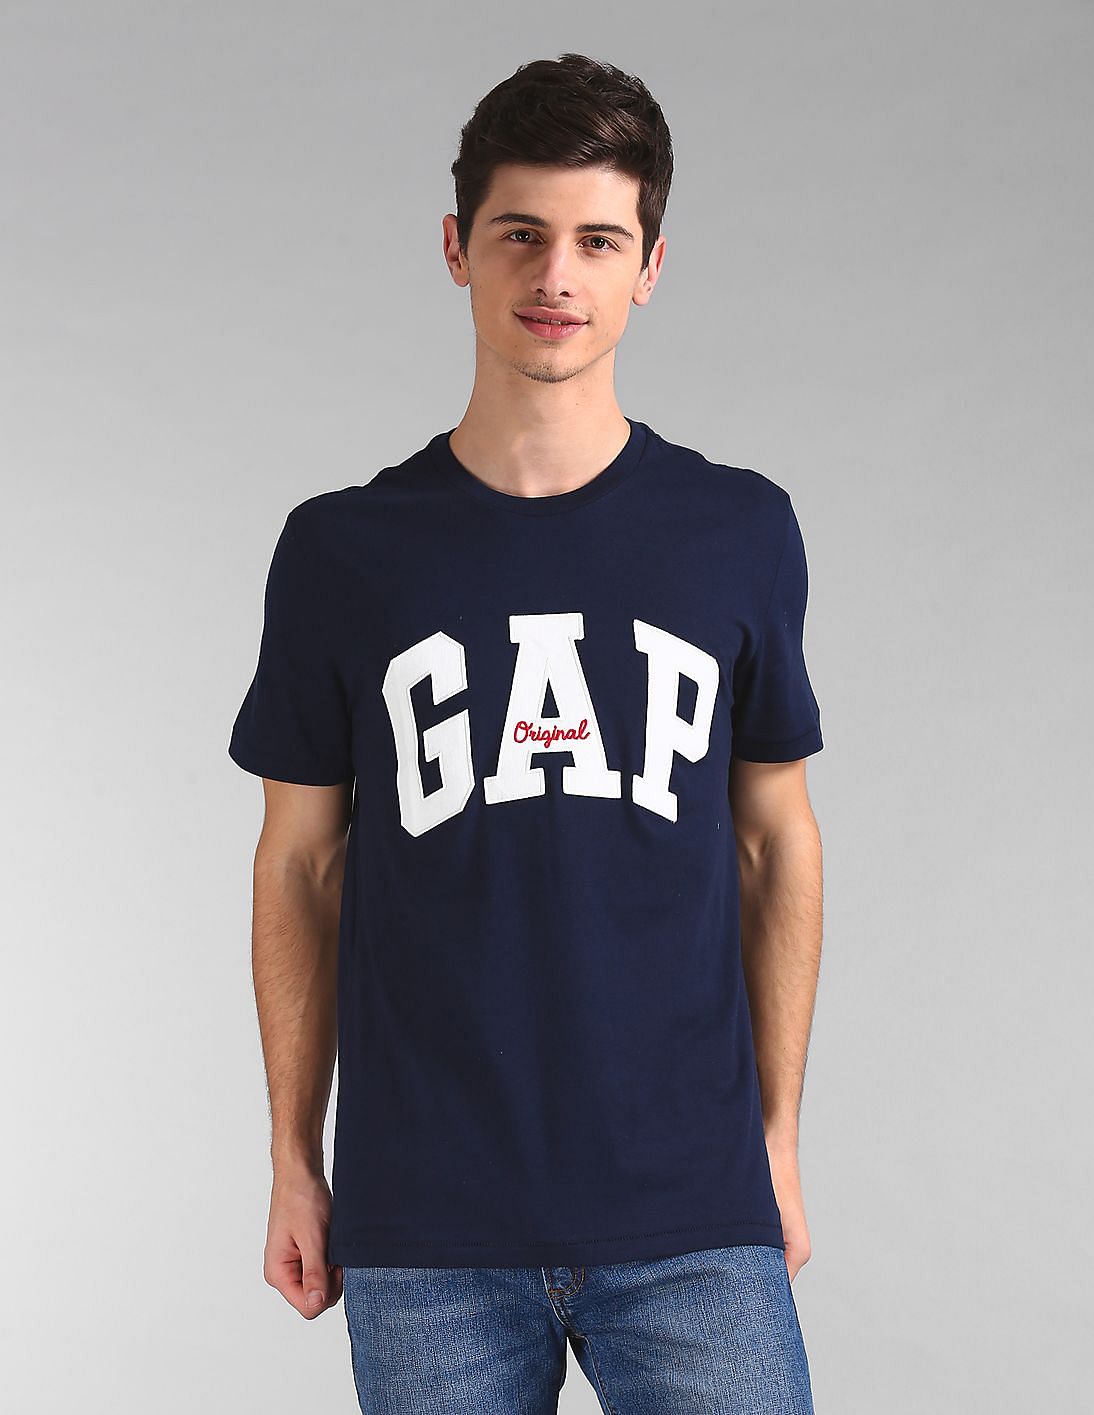 Buy > the original tee shirt > in stock